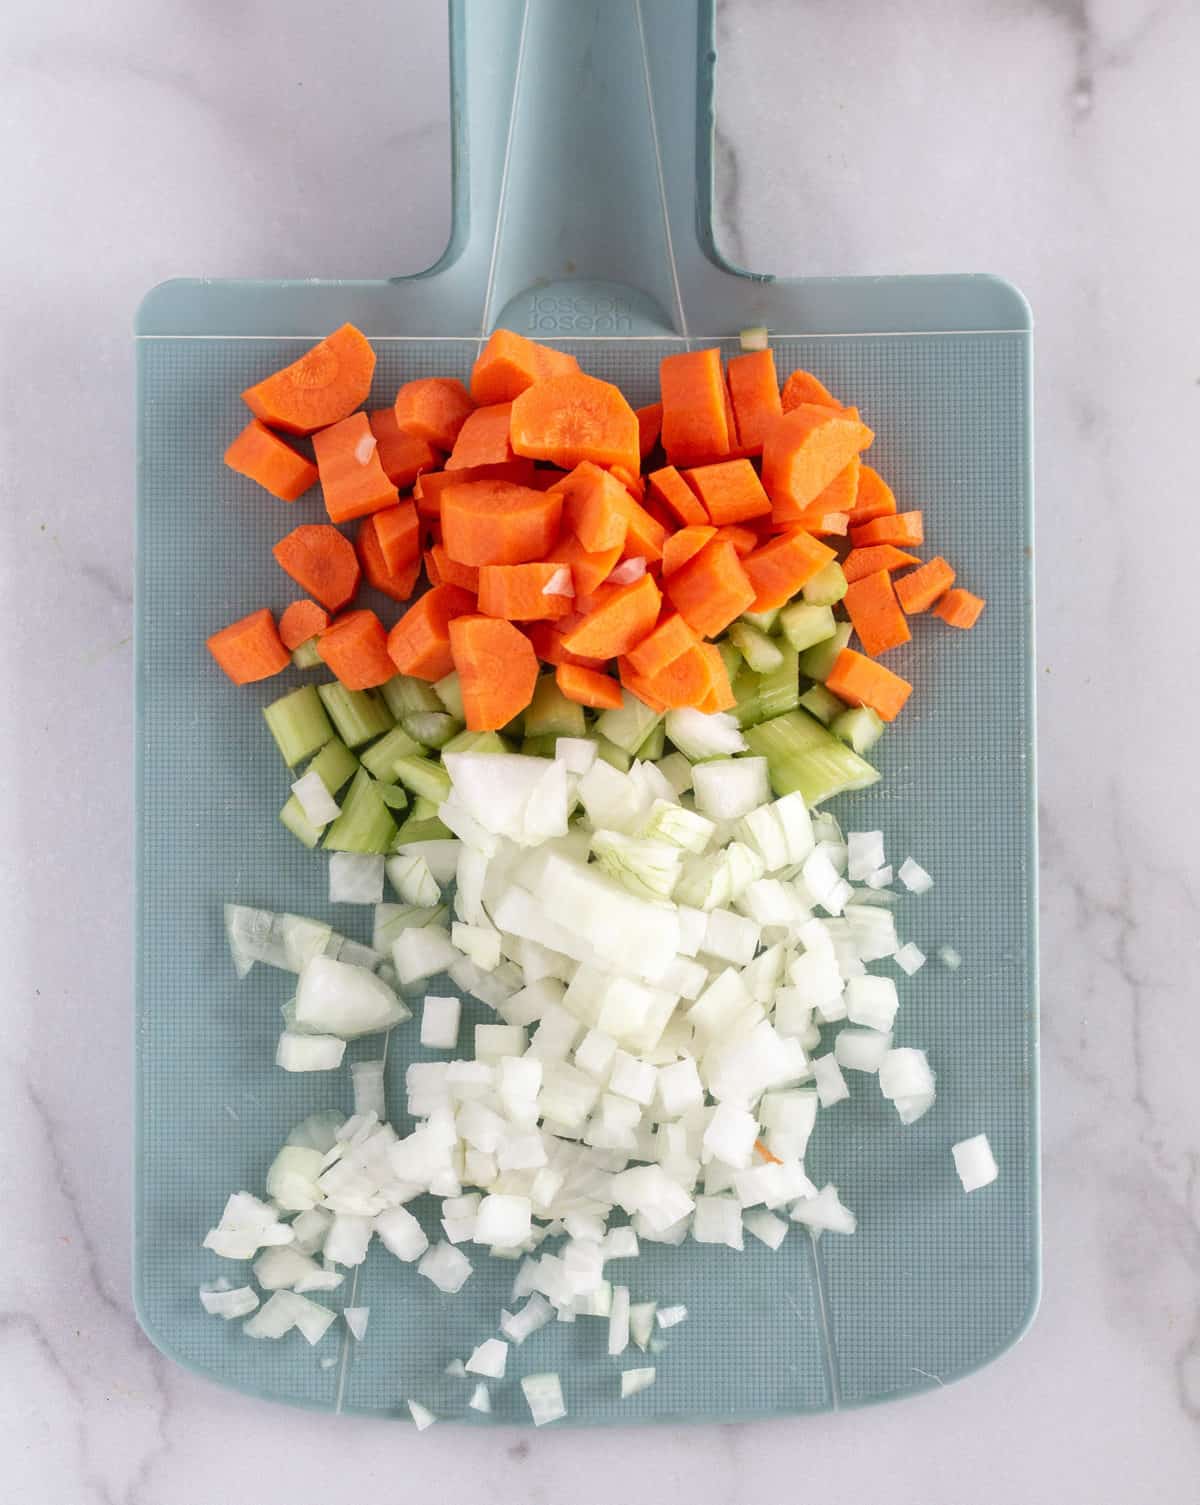 chopped veggies on cutting board